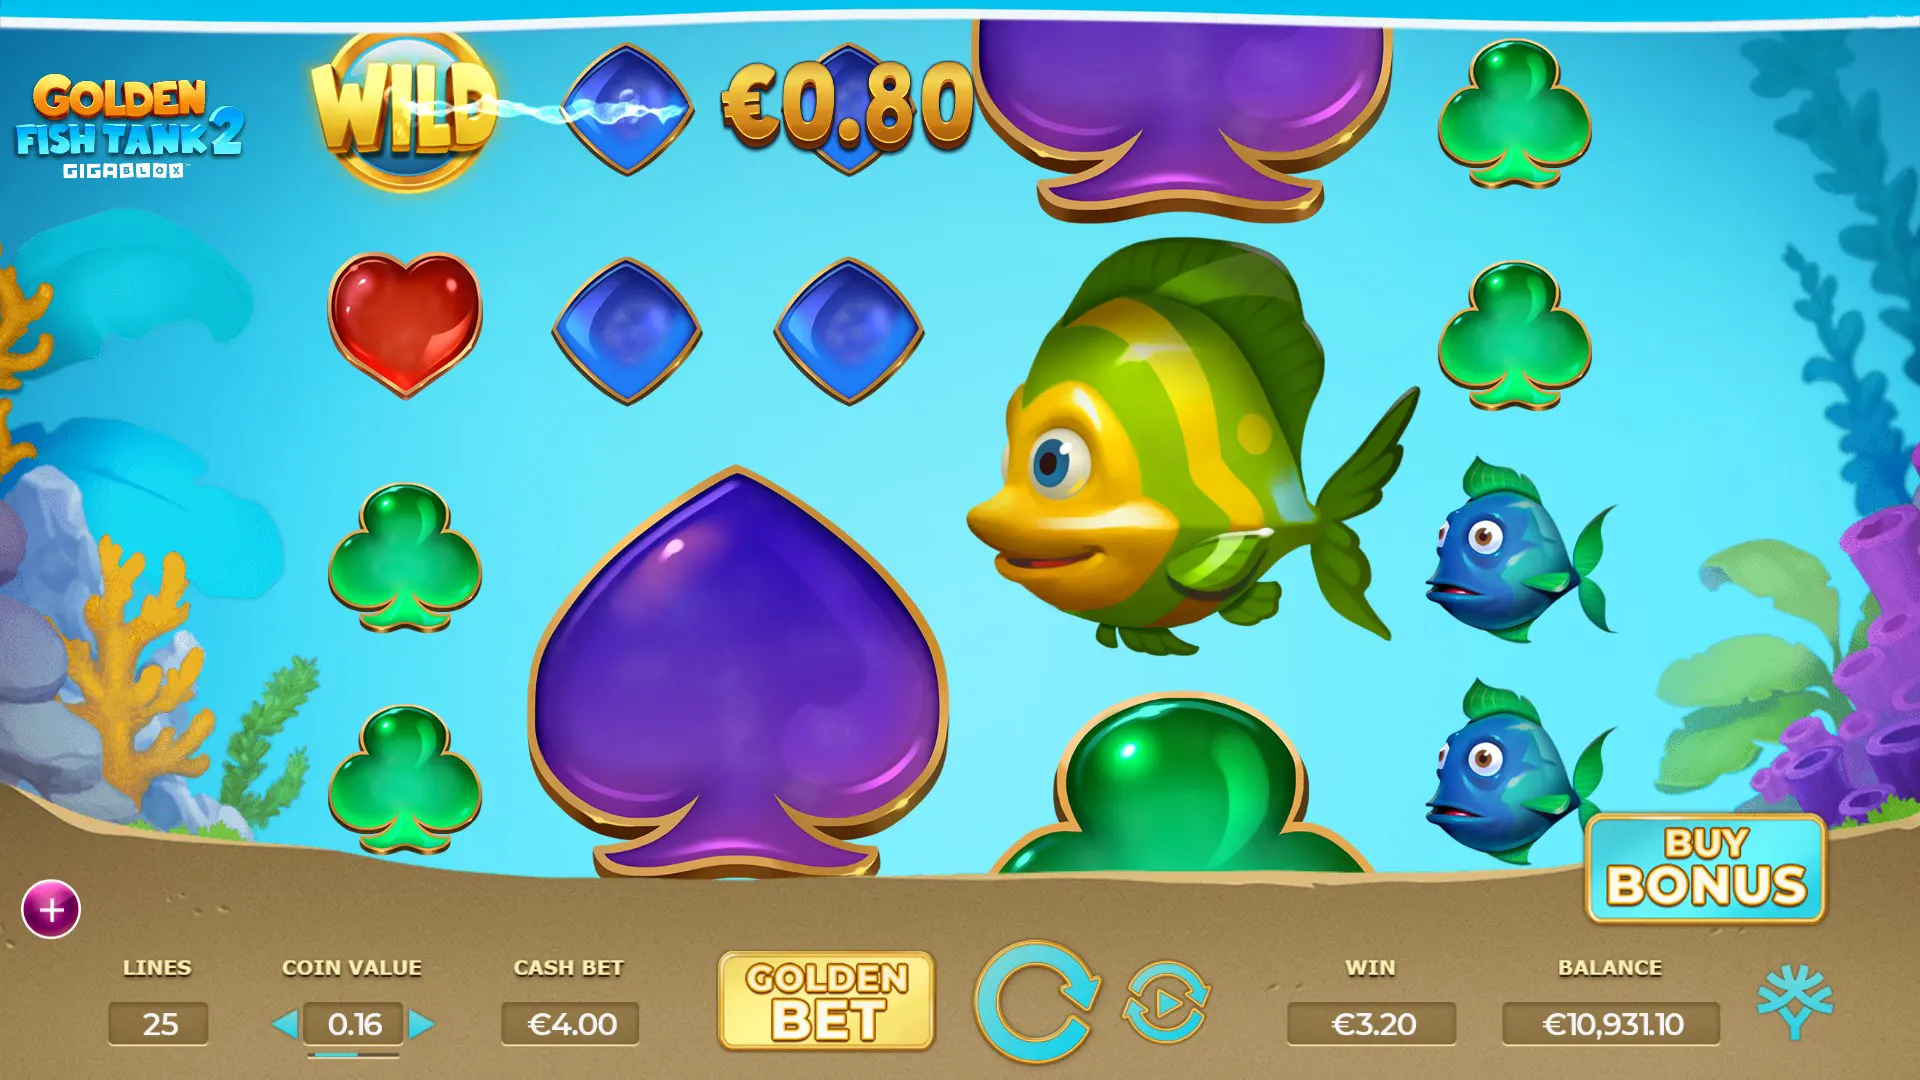 Golden Fish Tank 2 Gigablox demo play